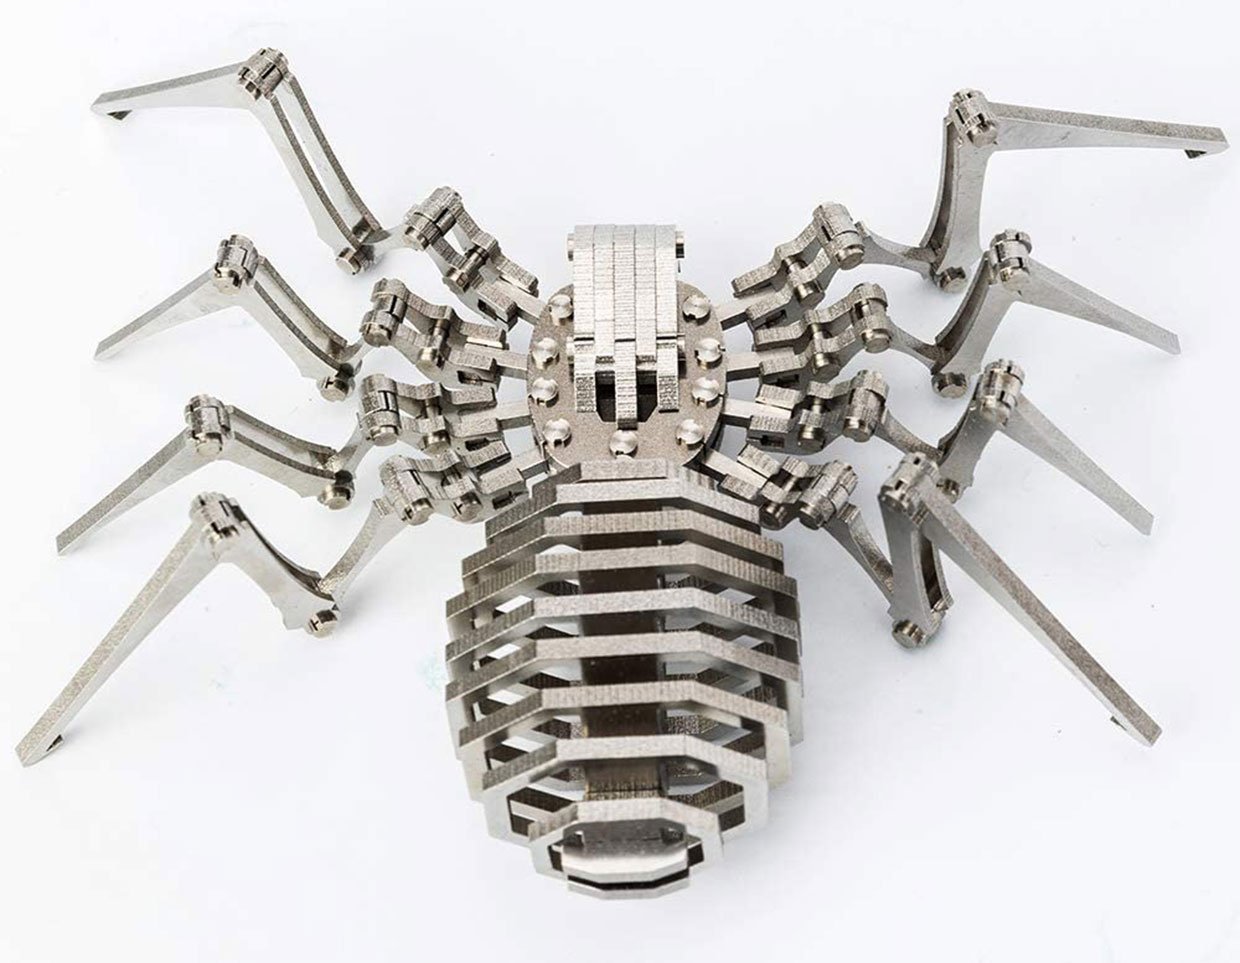 Madsteel Metal Spider Model